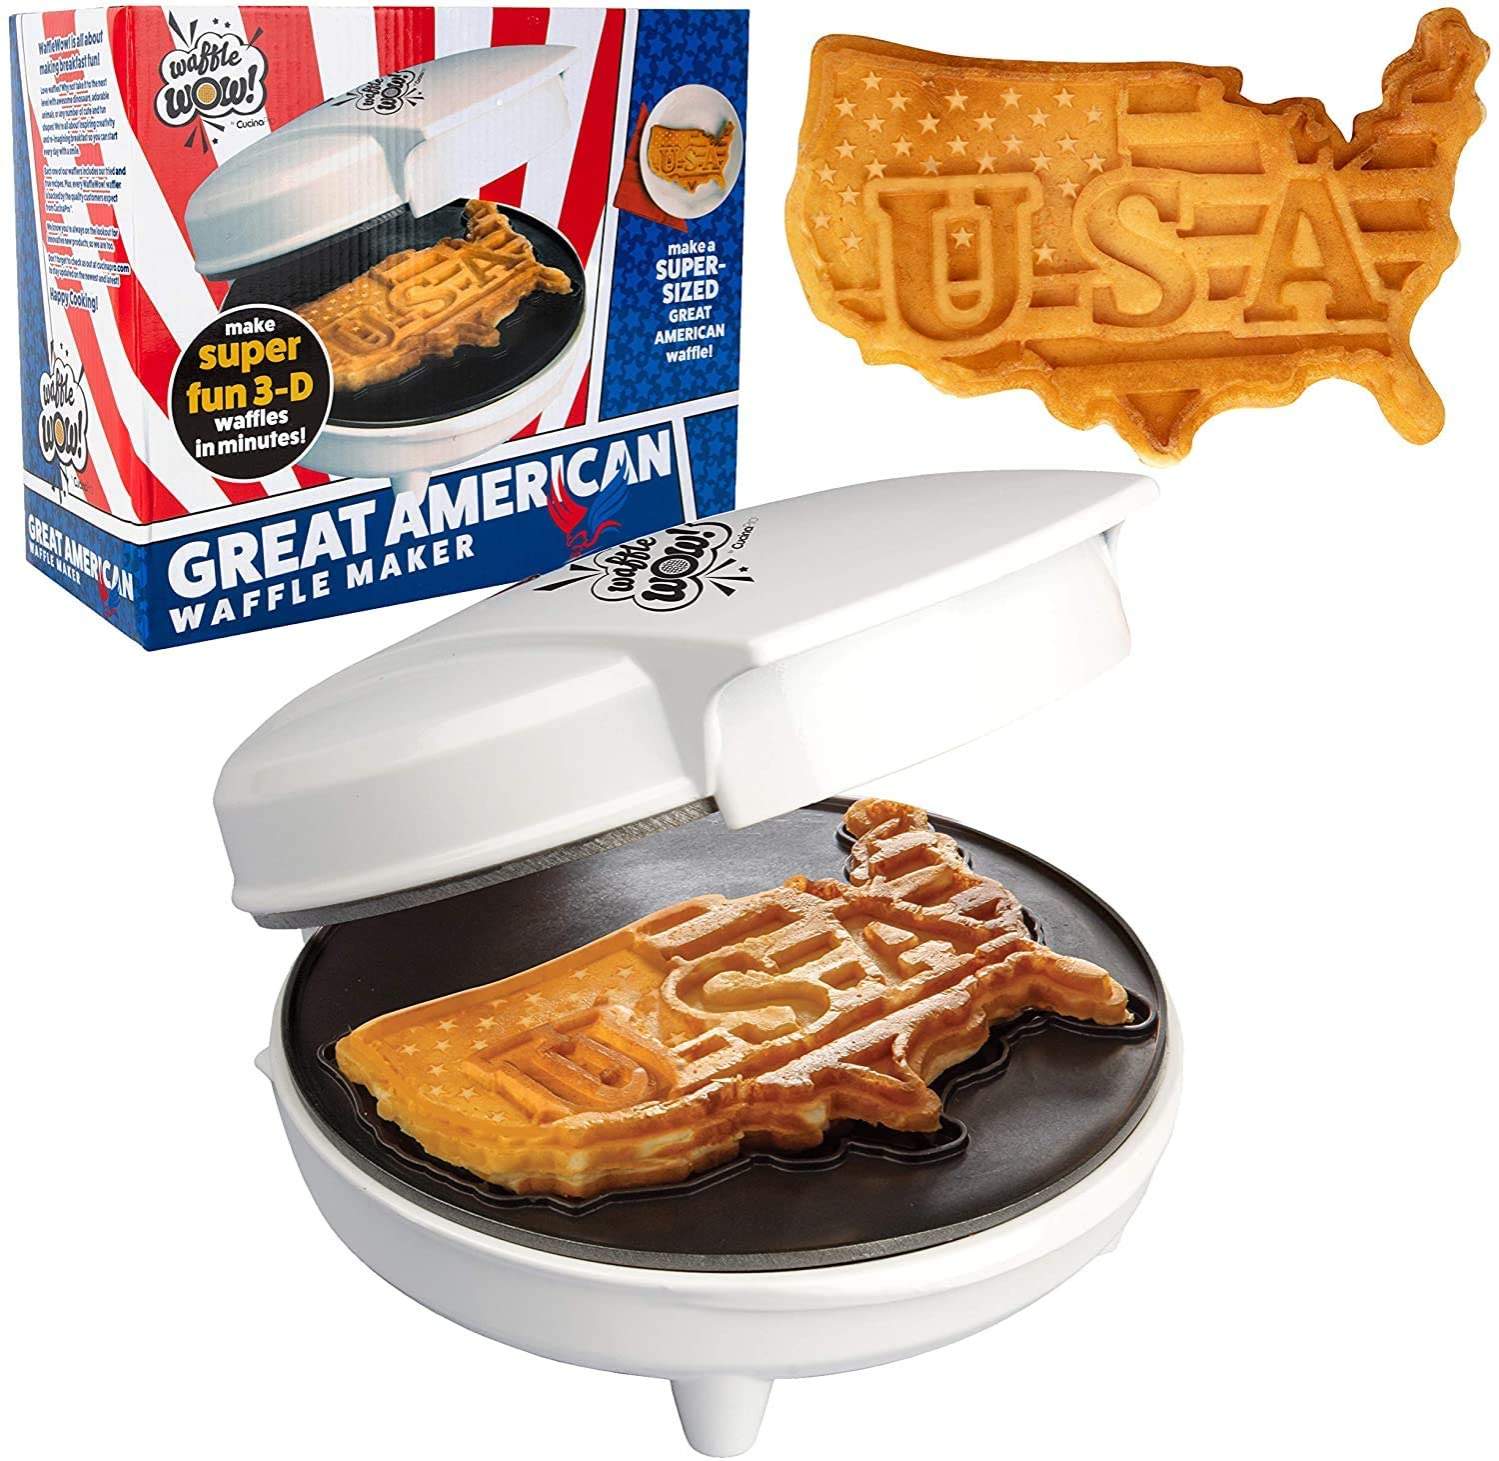 Great American-Waffle Wow!-